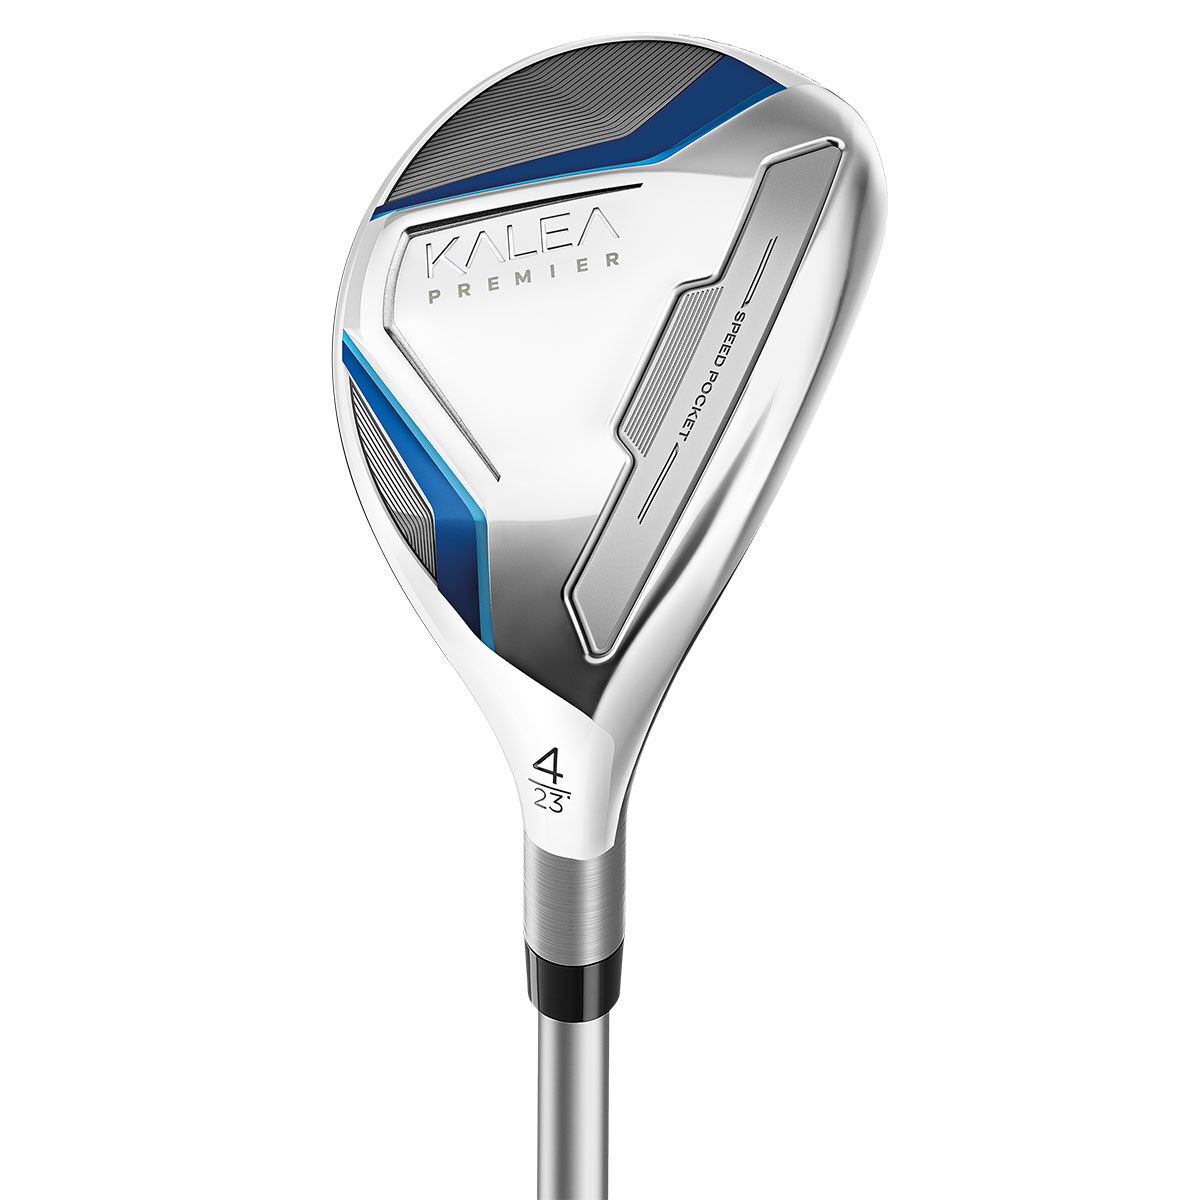 TaylorMade Silver and Blue Women’s Kalea Premier Custom Fit Golf Hybrid | American Golf, One Size